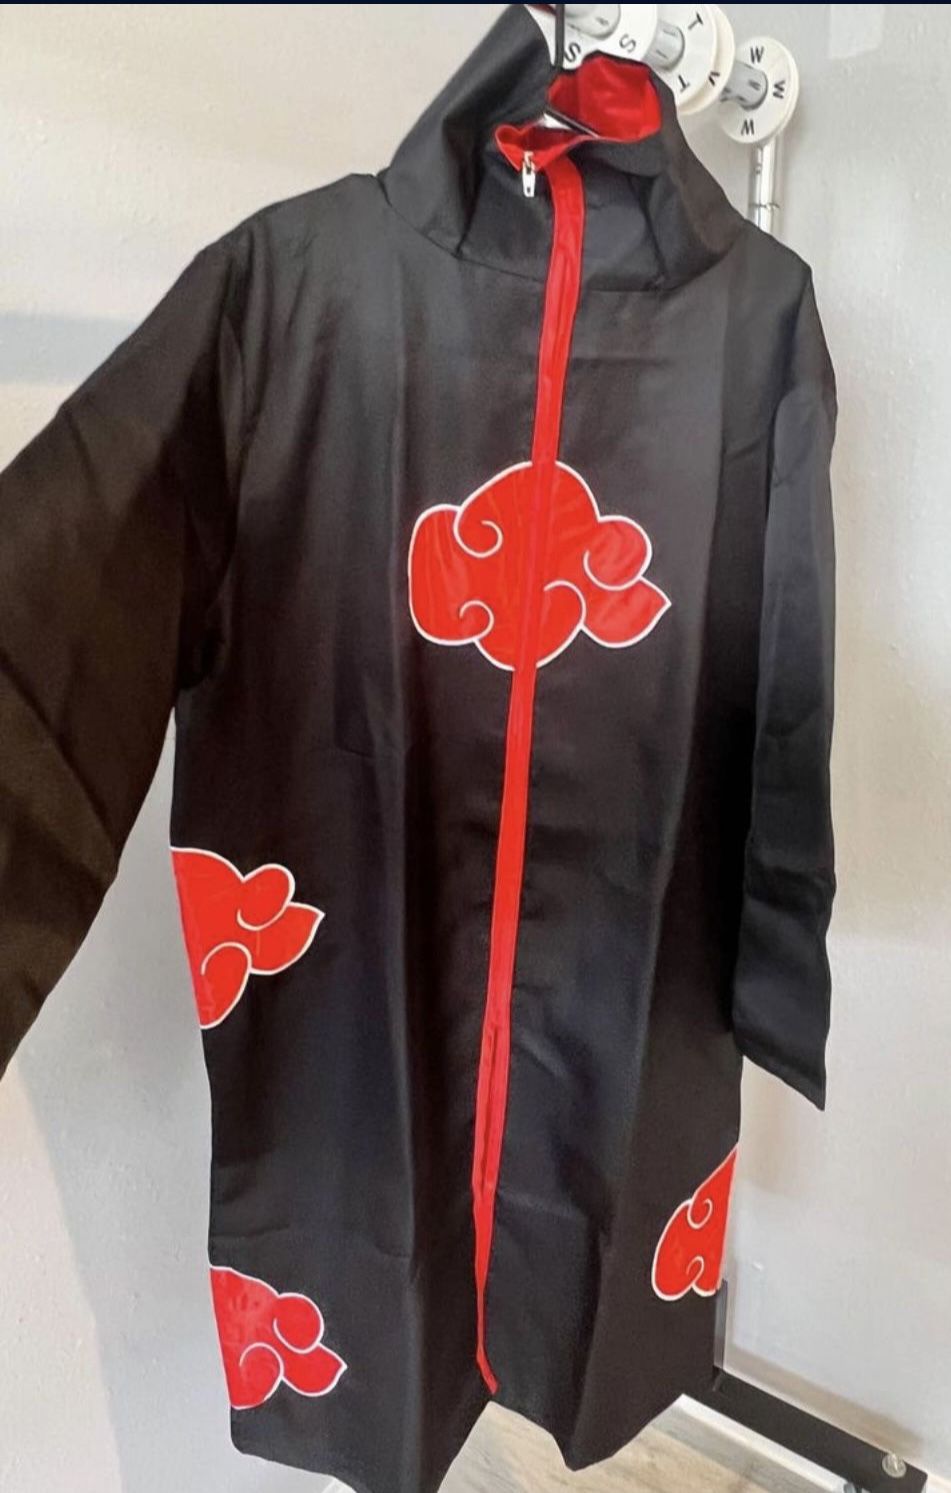 CHAOS MONKEY Anime Akatsuki Cloak Costume Long Robe Uchiha Itachi Halloween Uniform Cosplay for Adults and Kids